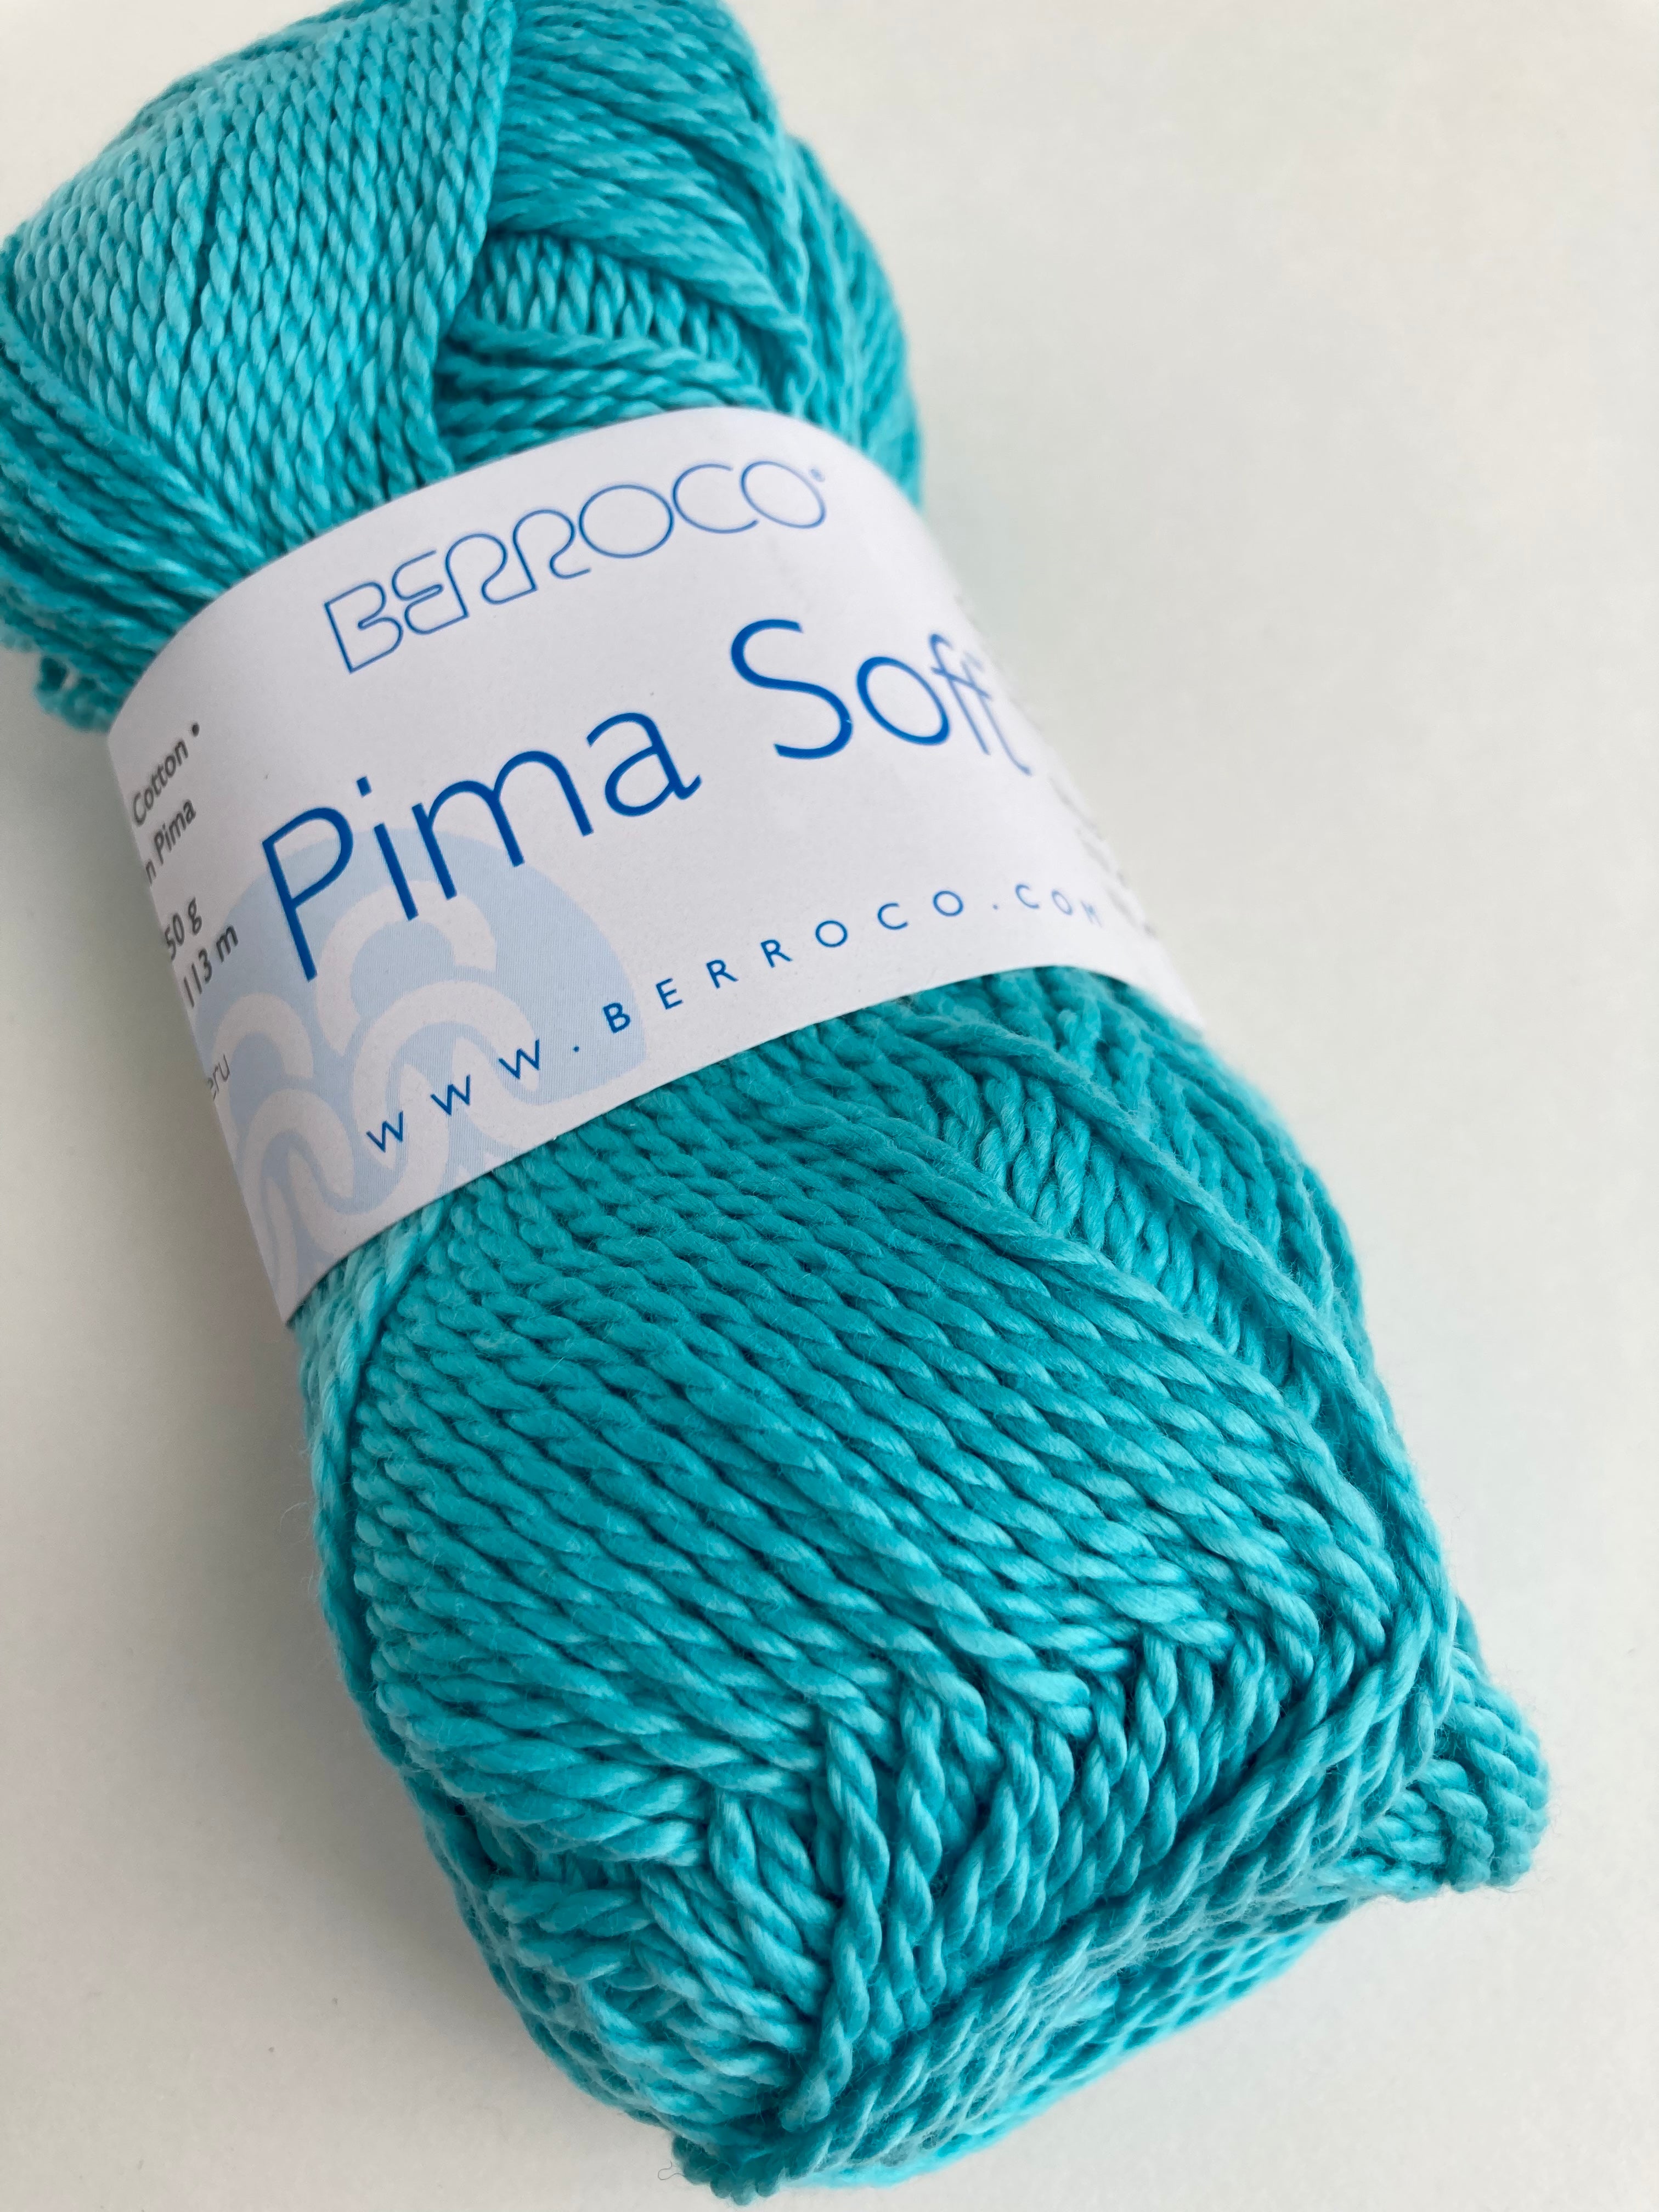 Sky 4620 - Pima Soft from Berroco